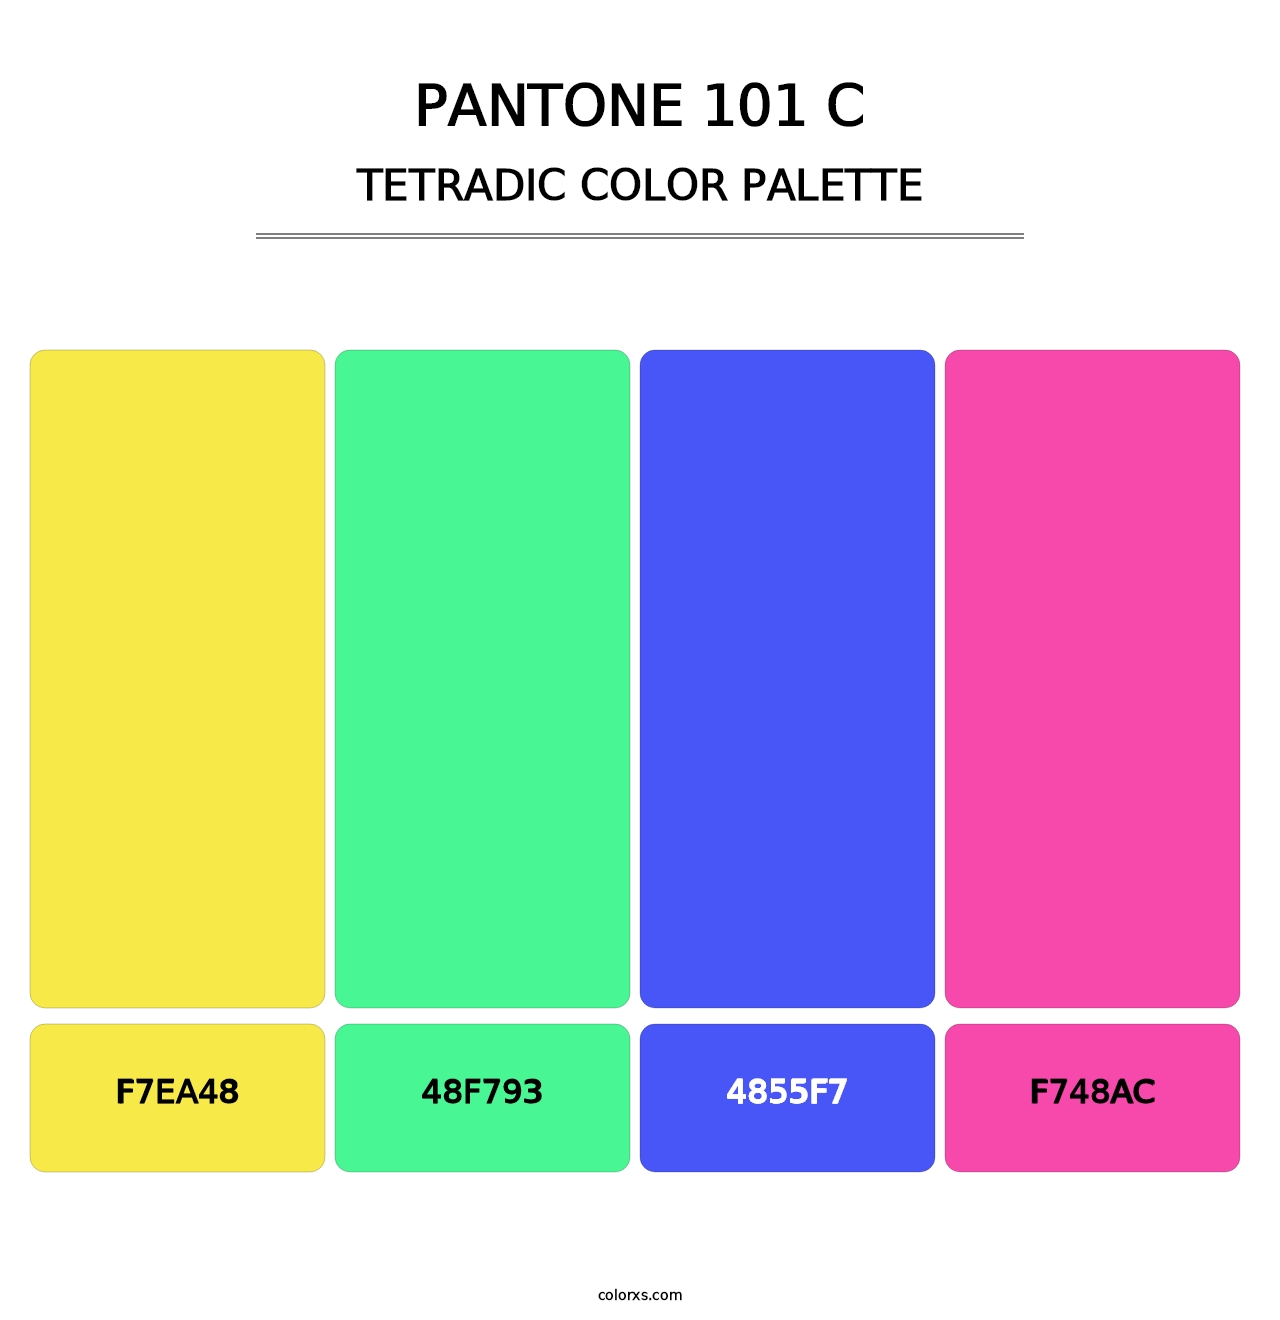 PANTONE 101 C - Tetradic Color Palette